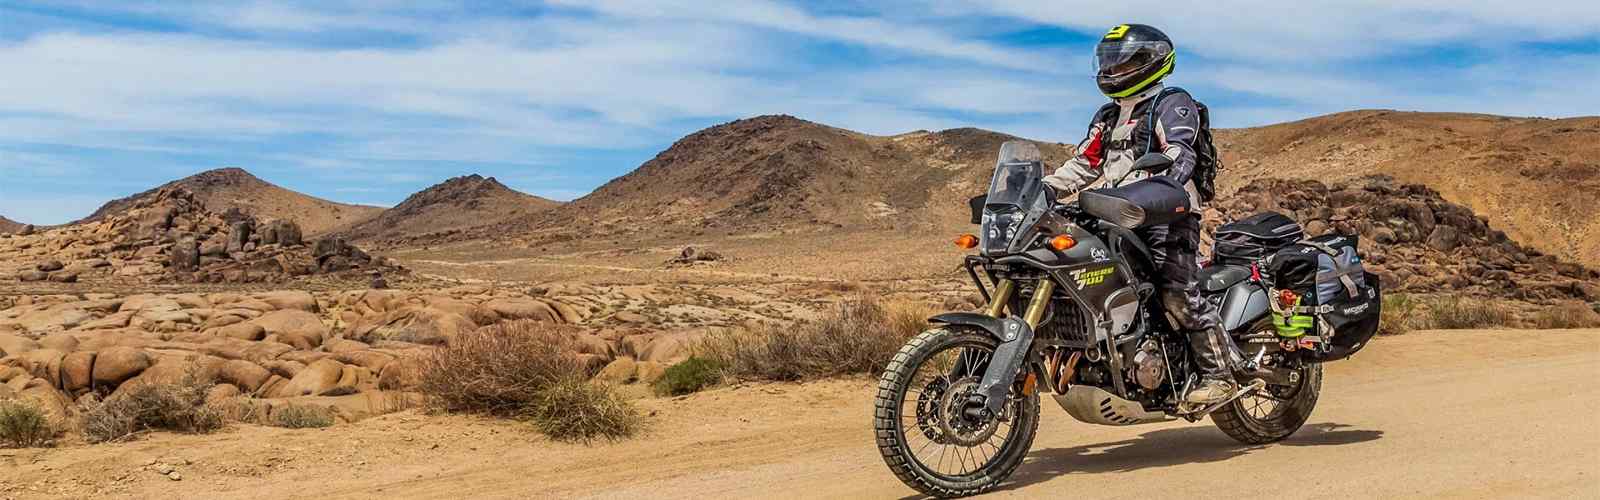 Marocco in moto off-road: un'avventura molto affascinante